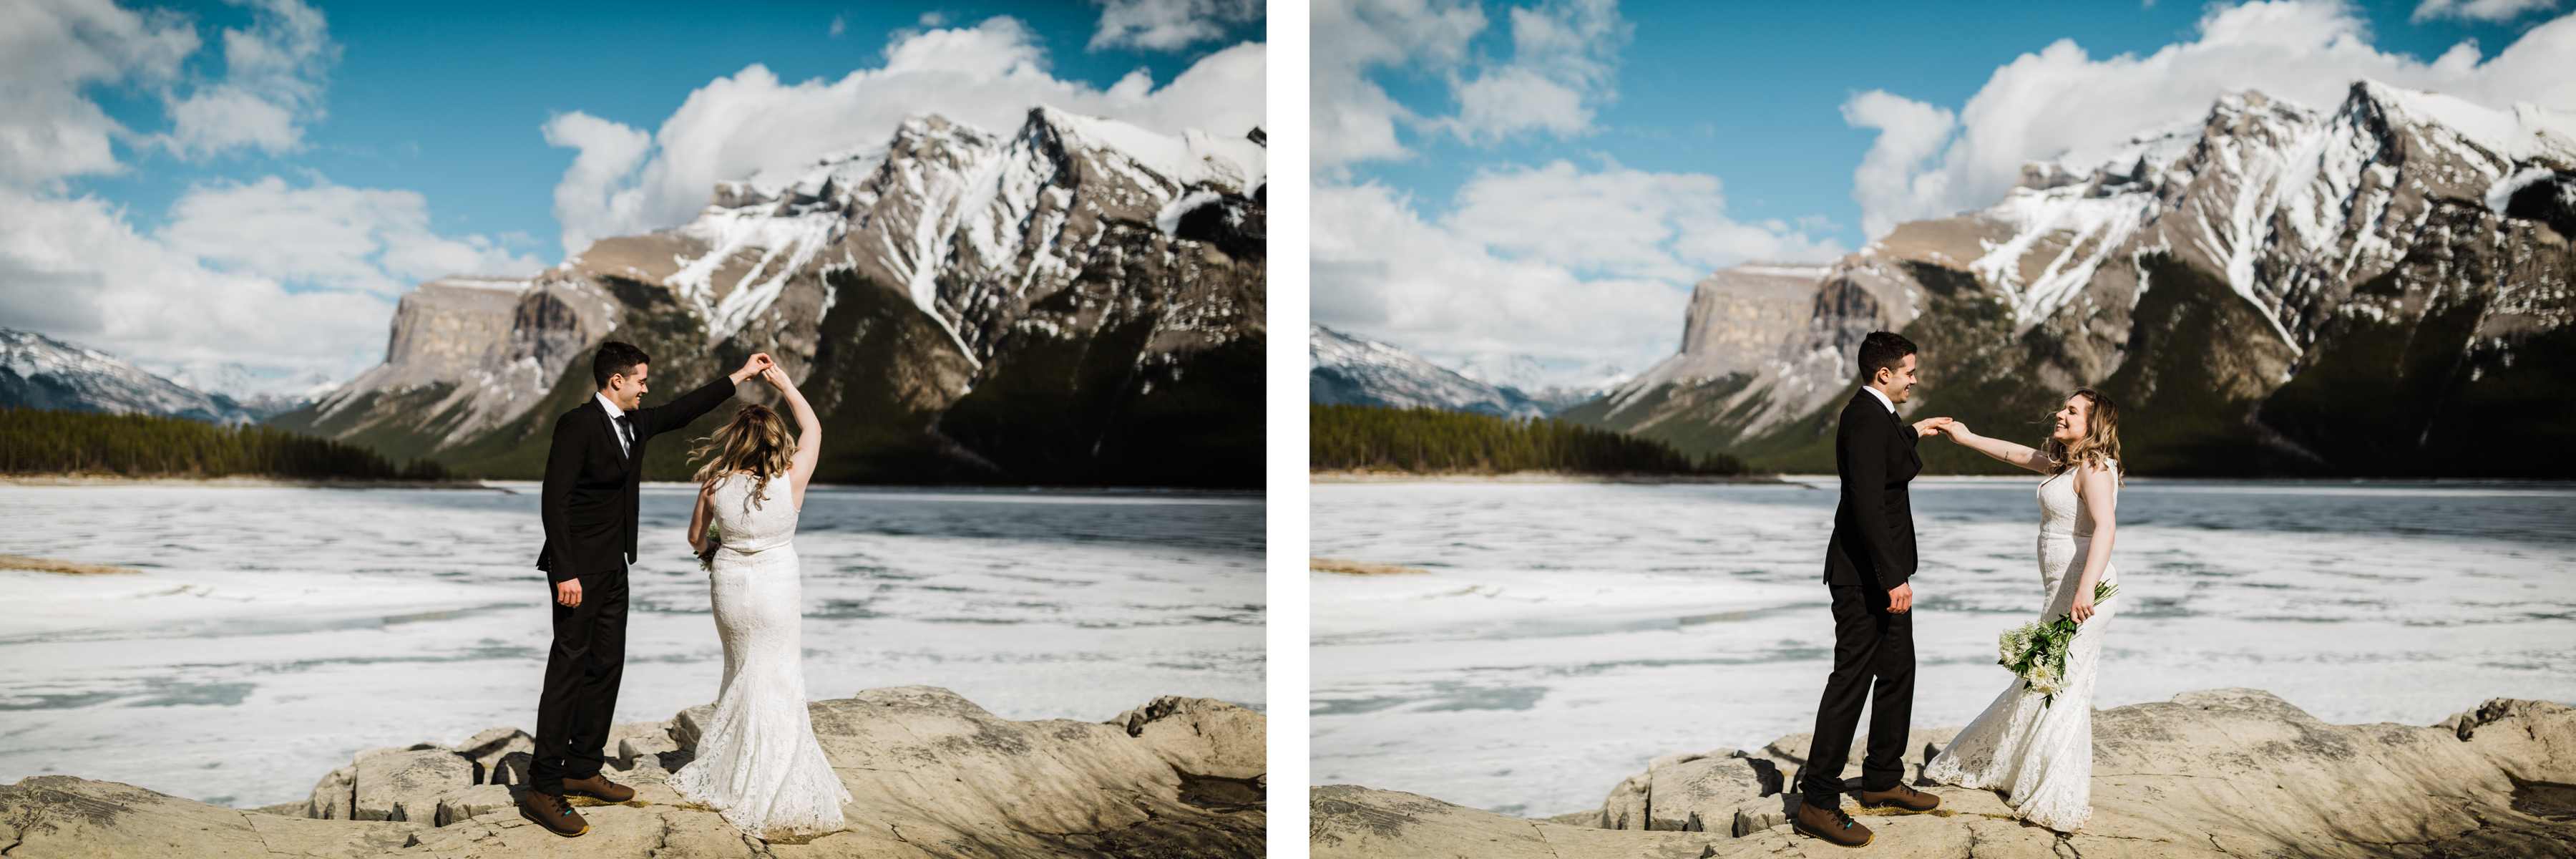 Banff Adventure Wedding Photographers for Lake Minnewanka Elopement - Image 28